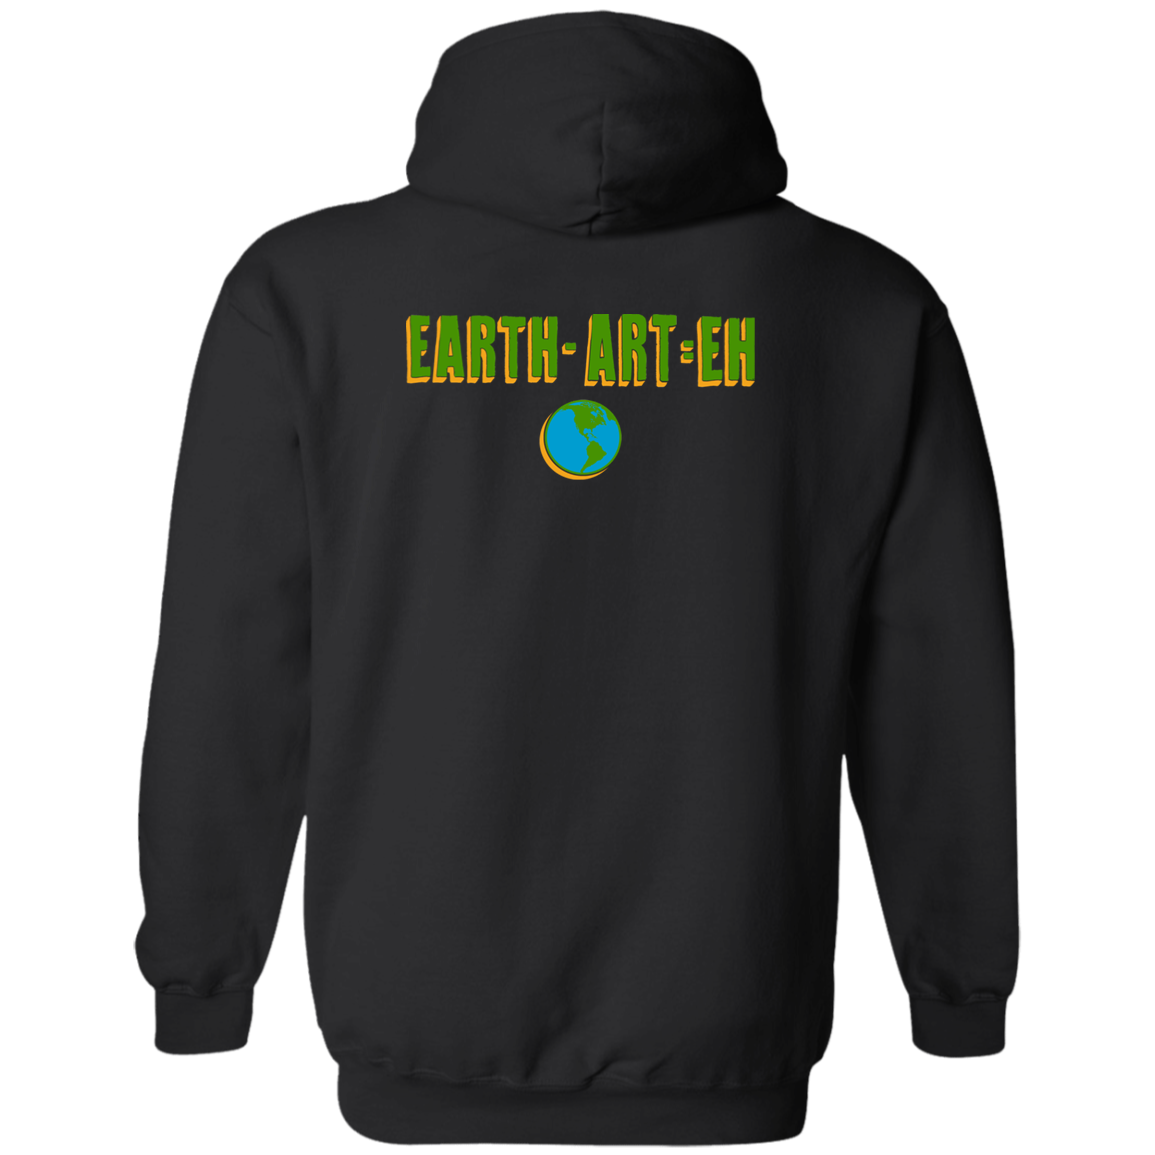 ArtichokeUSA Custom Design. EARTH-ART=EH. Zip Up Hooded Sweatshirt